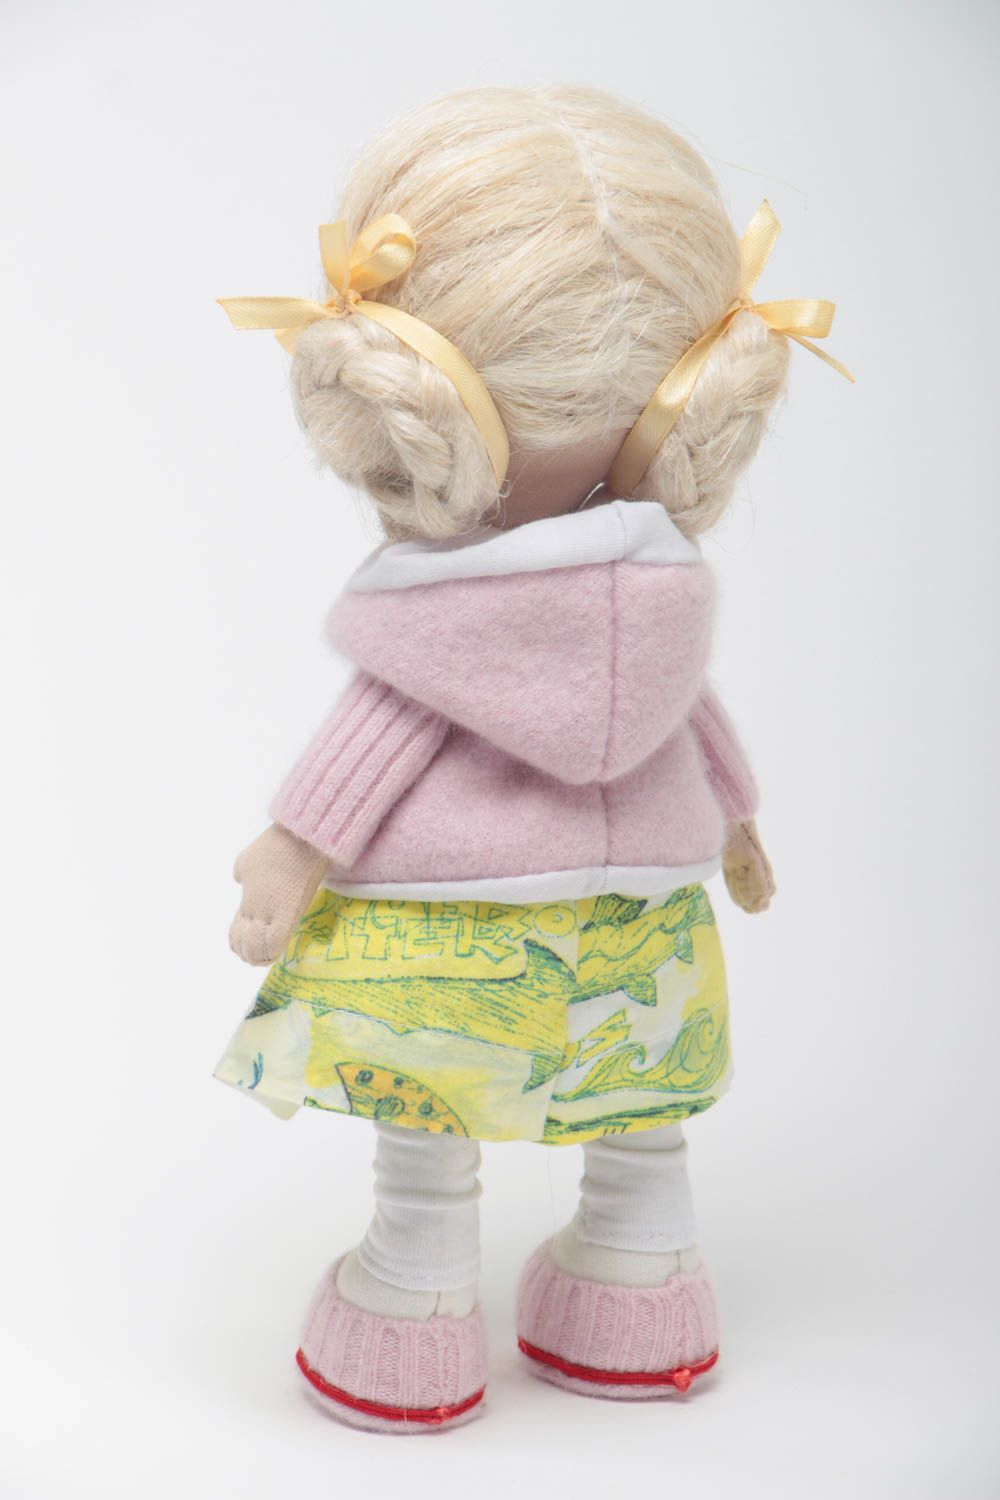 Handmade rag doll childrens soft stuffed toy best toys for kids gift ideas photo 4